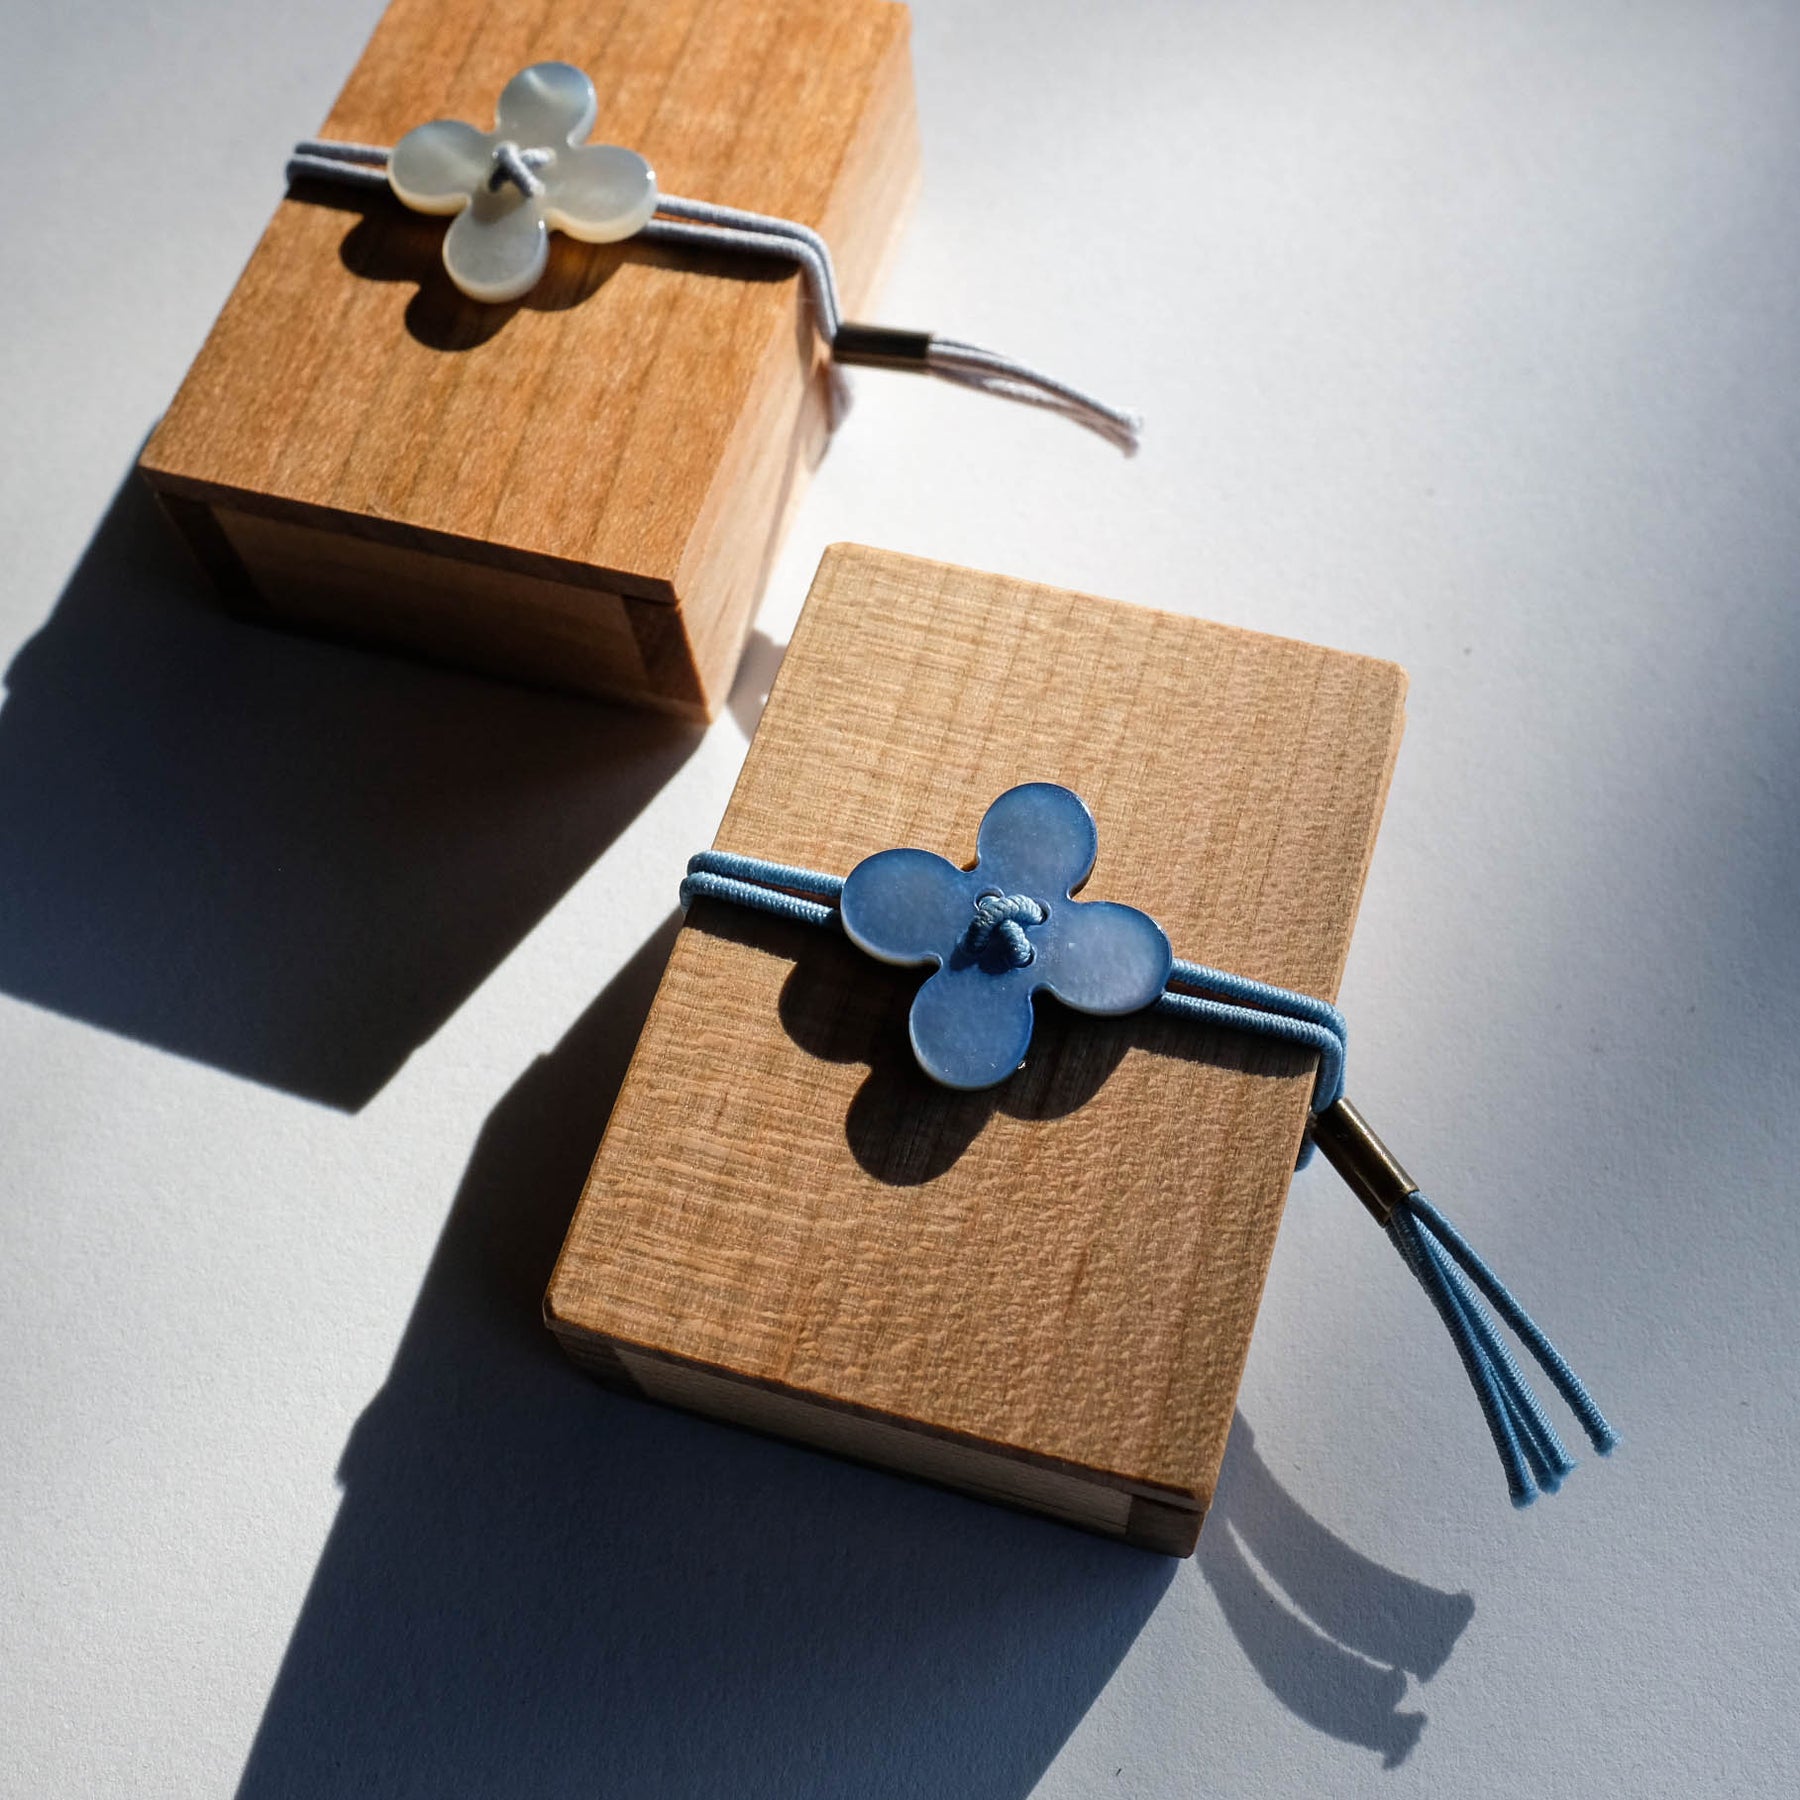 Glass Sewing Pins in a Cherry-Wood Box - Cohana上質なハンドメイド